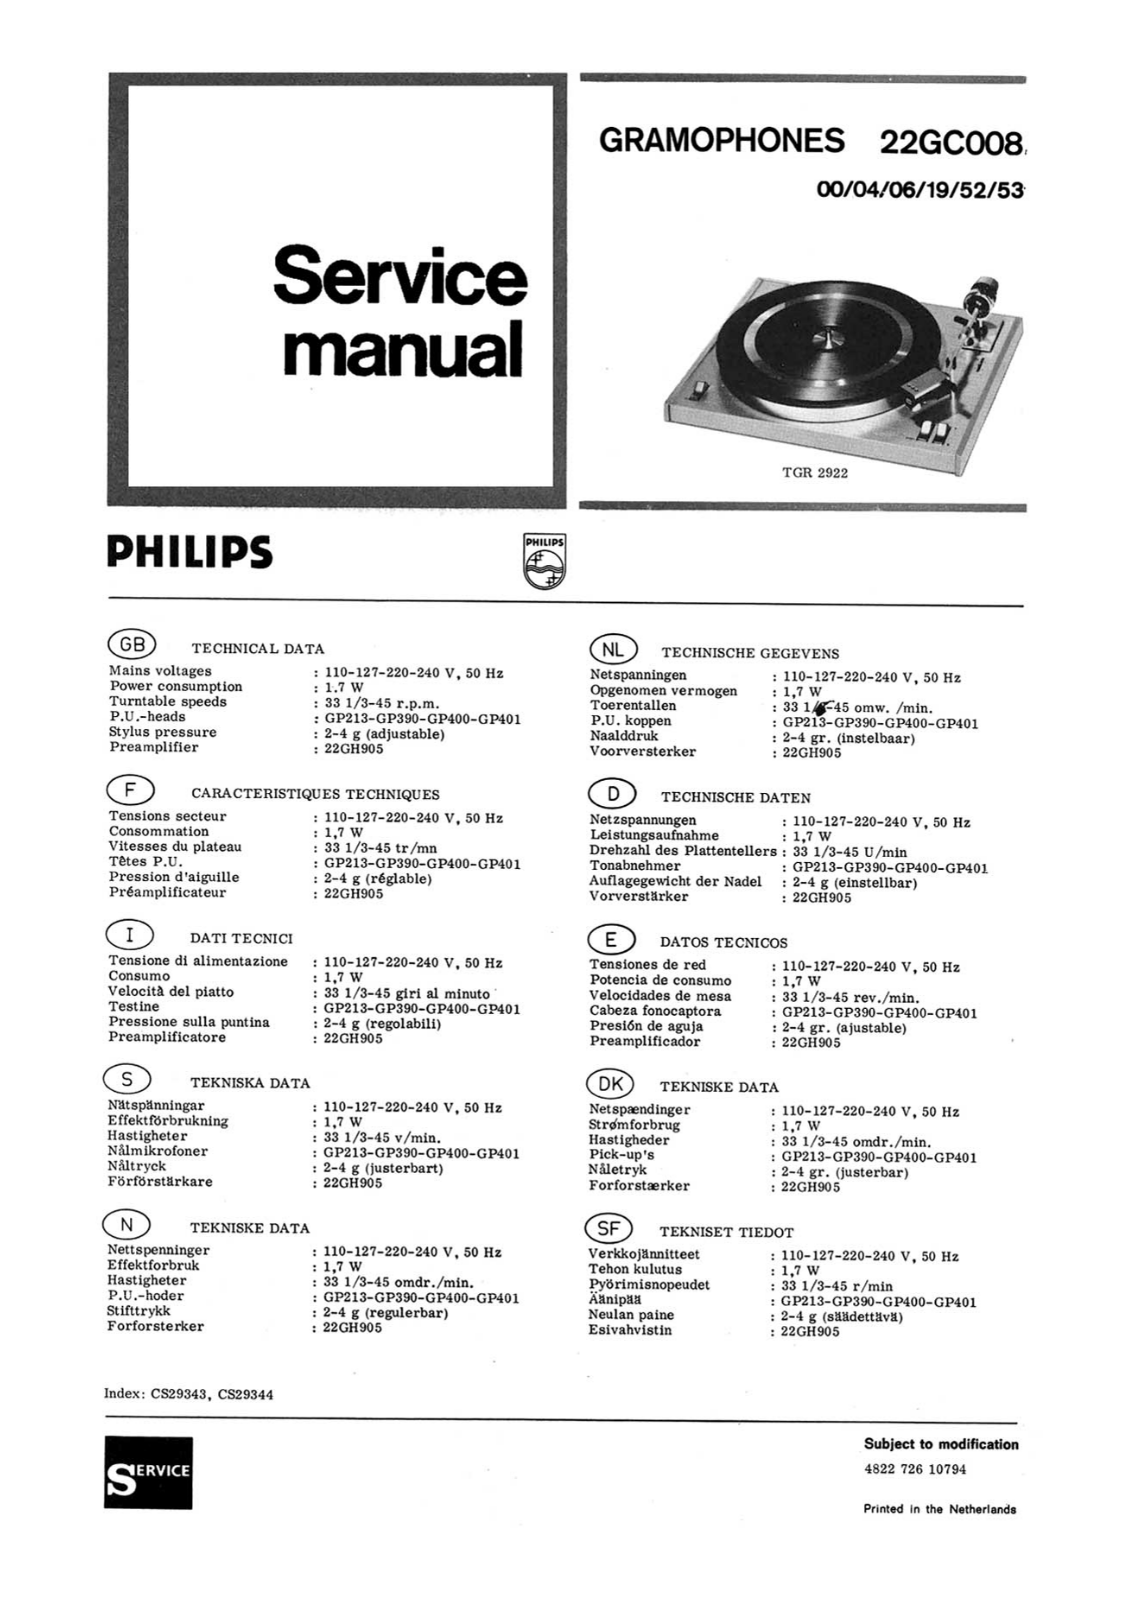 Philips 22-GC-008 Service Manual